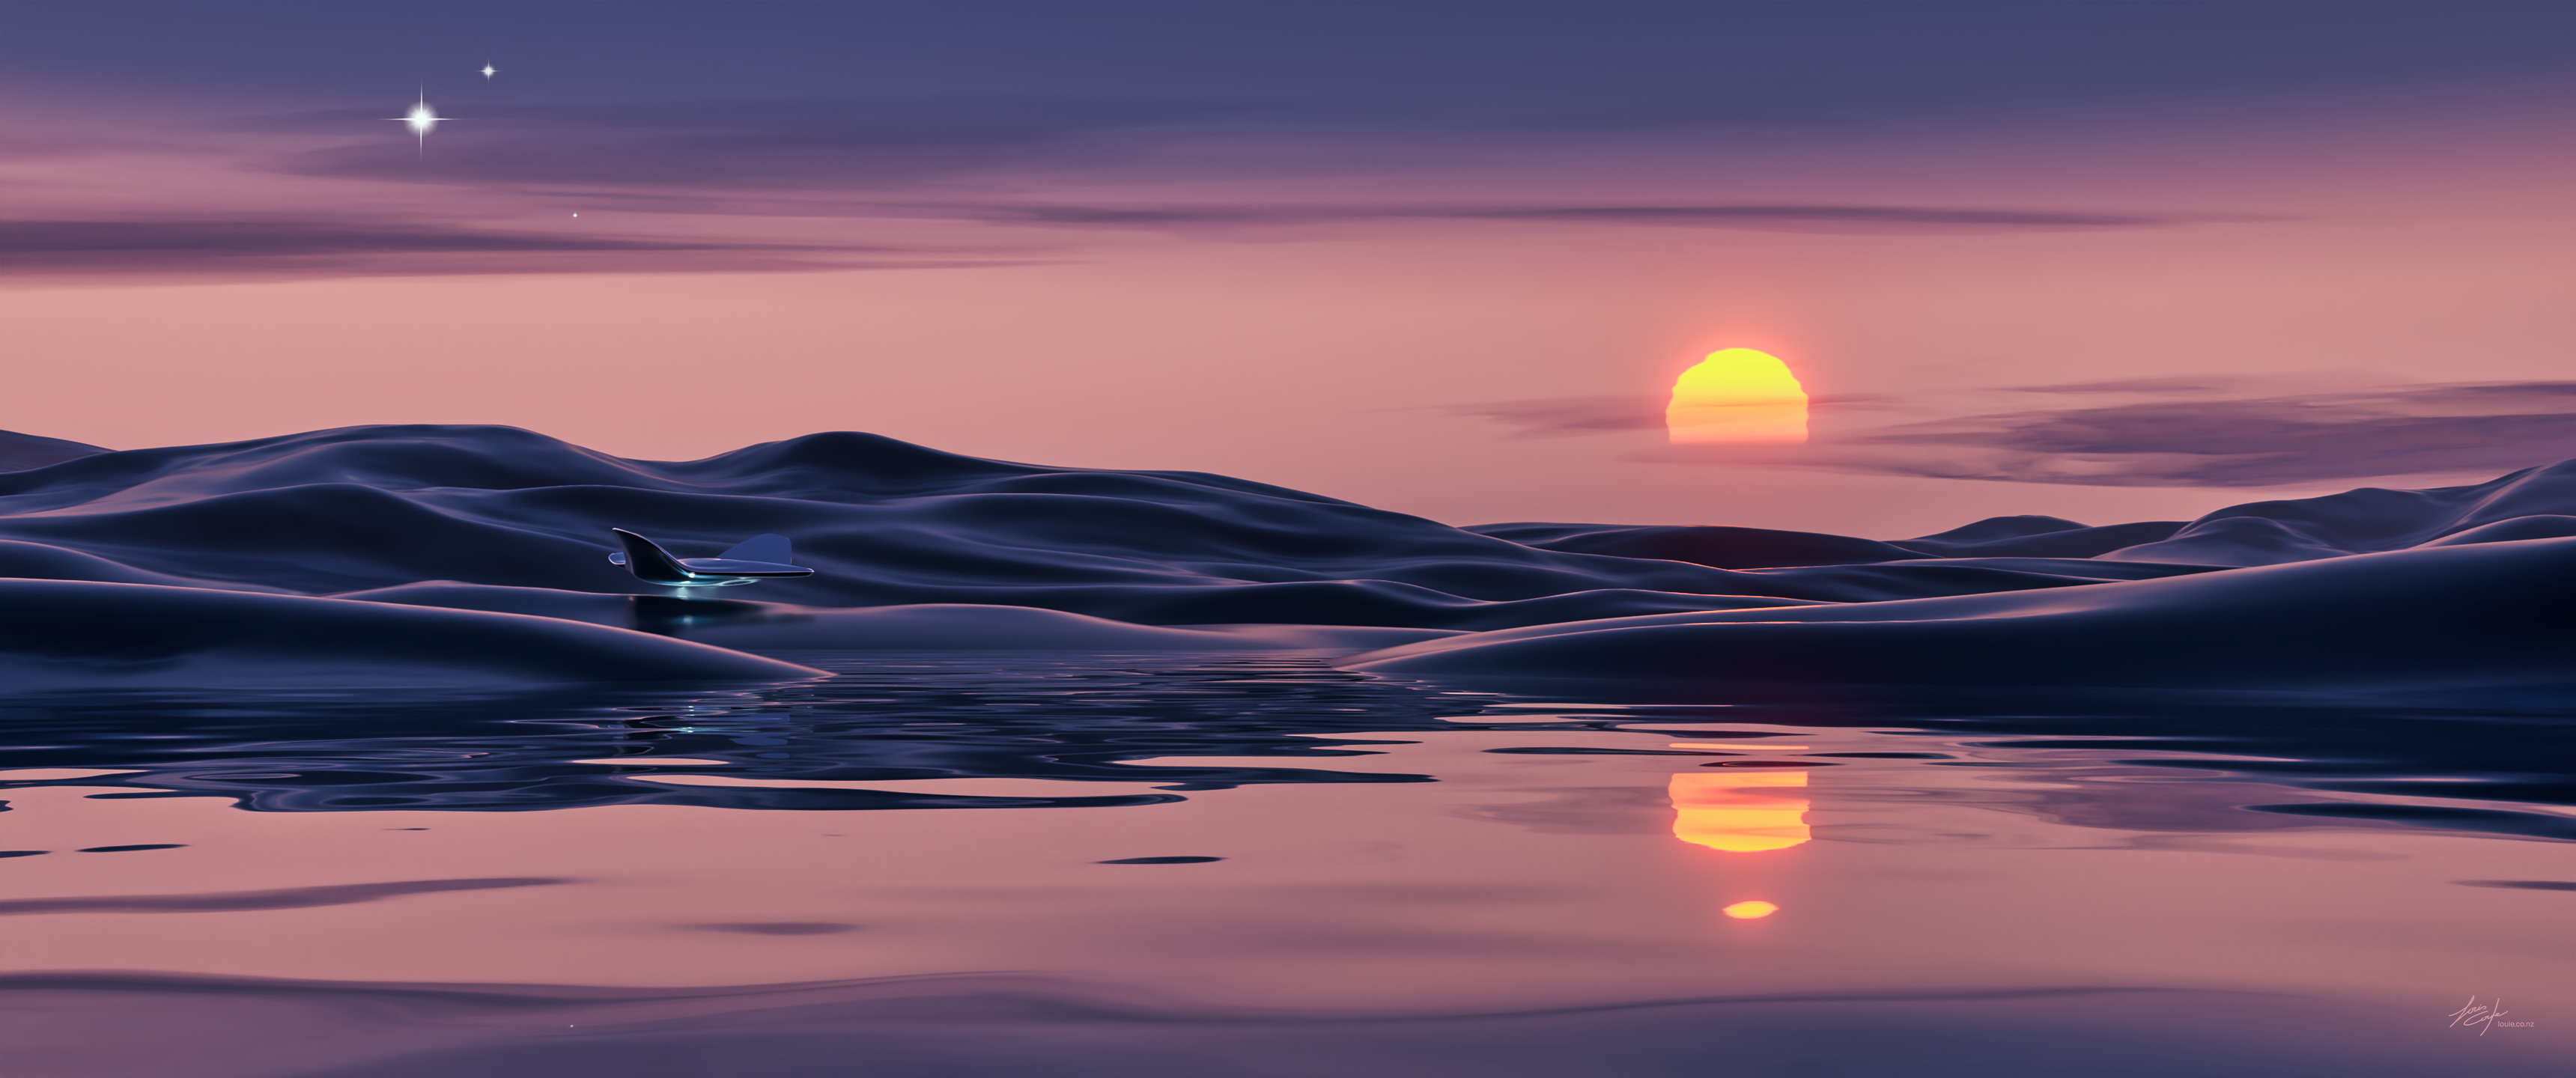 Louis Coyle Digital Art Artwork Illustration Landscape Nature Wide Screen Sea Water Waves Sun Reflec 3440x1440